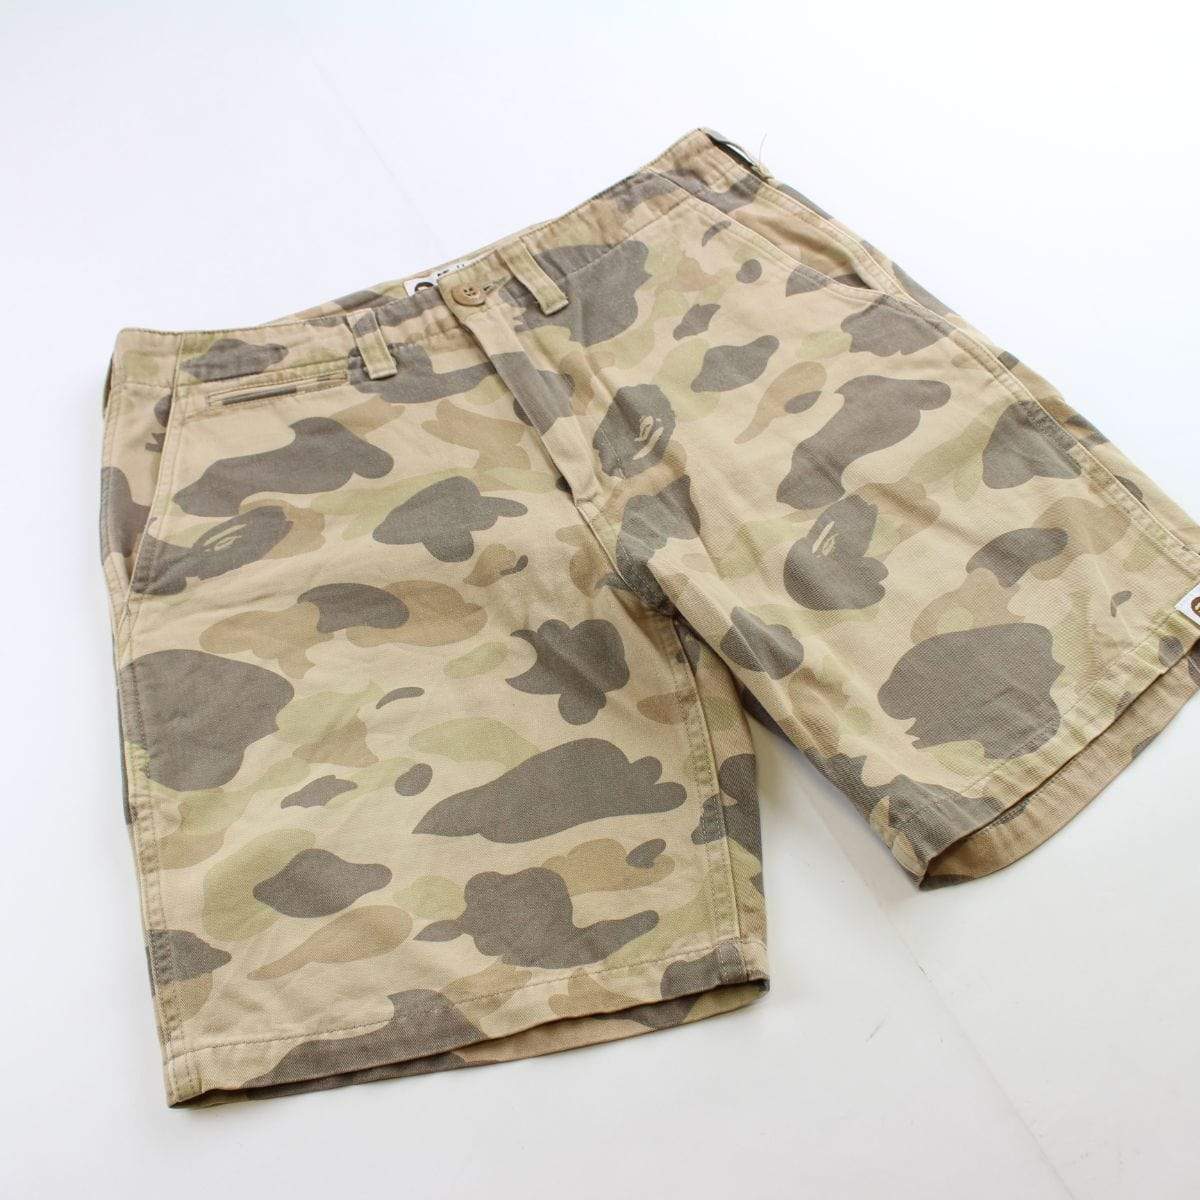 Bape Desert camo shorts - SaruGeneral